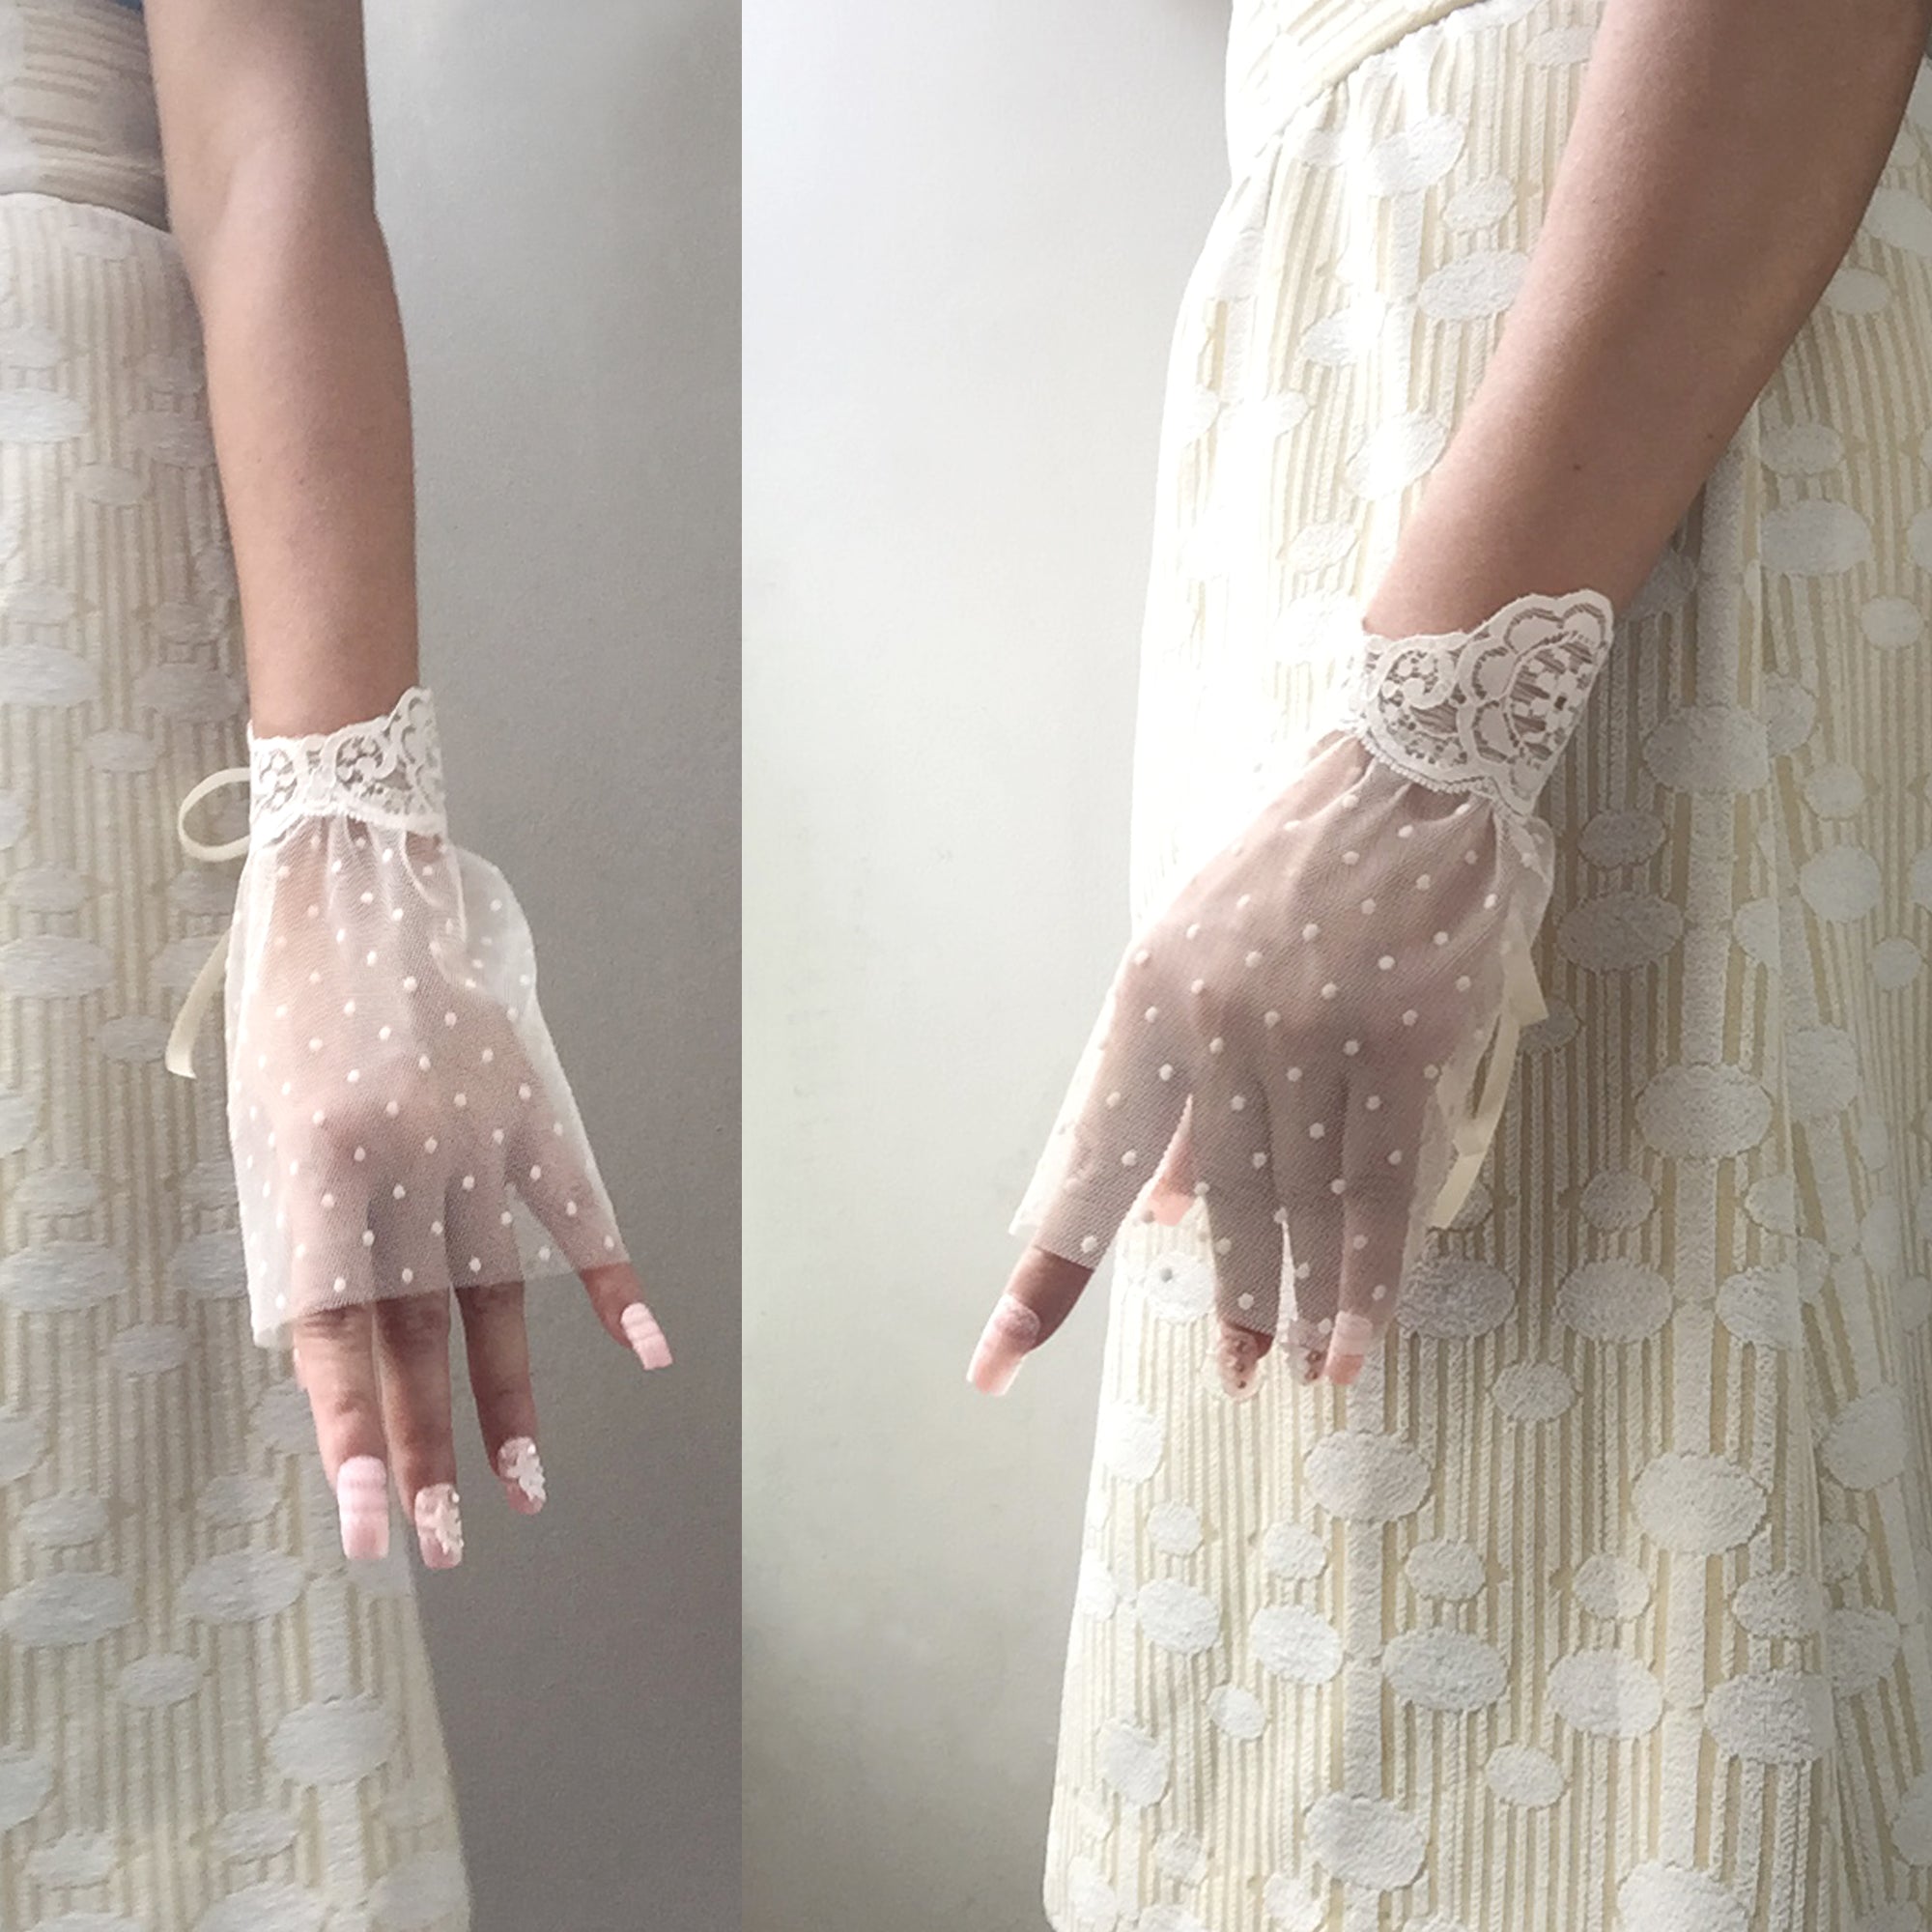 Polka Dot Lace Cuff Bracelet Ivory, Tea Party Lace Gloves, Vintage, Wedding